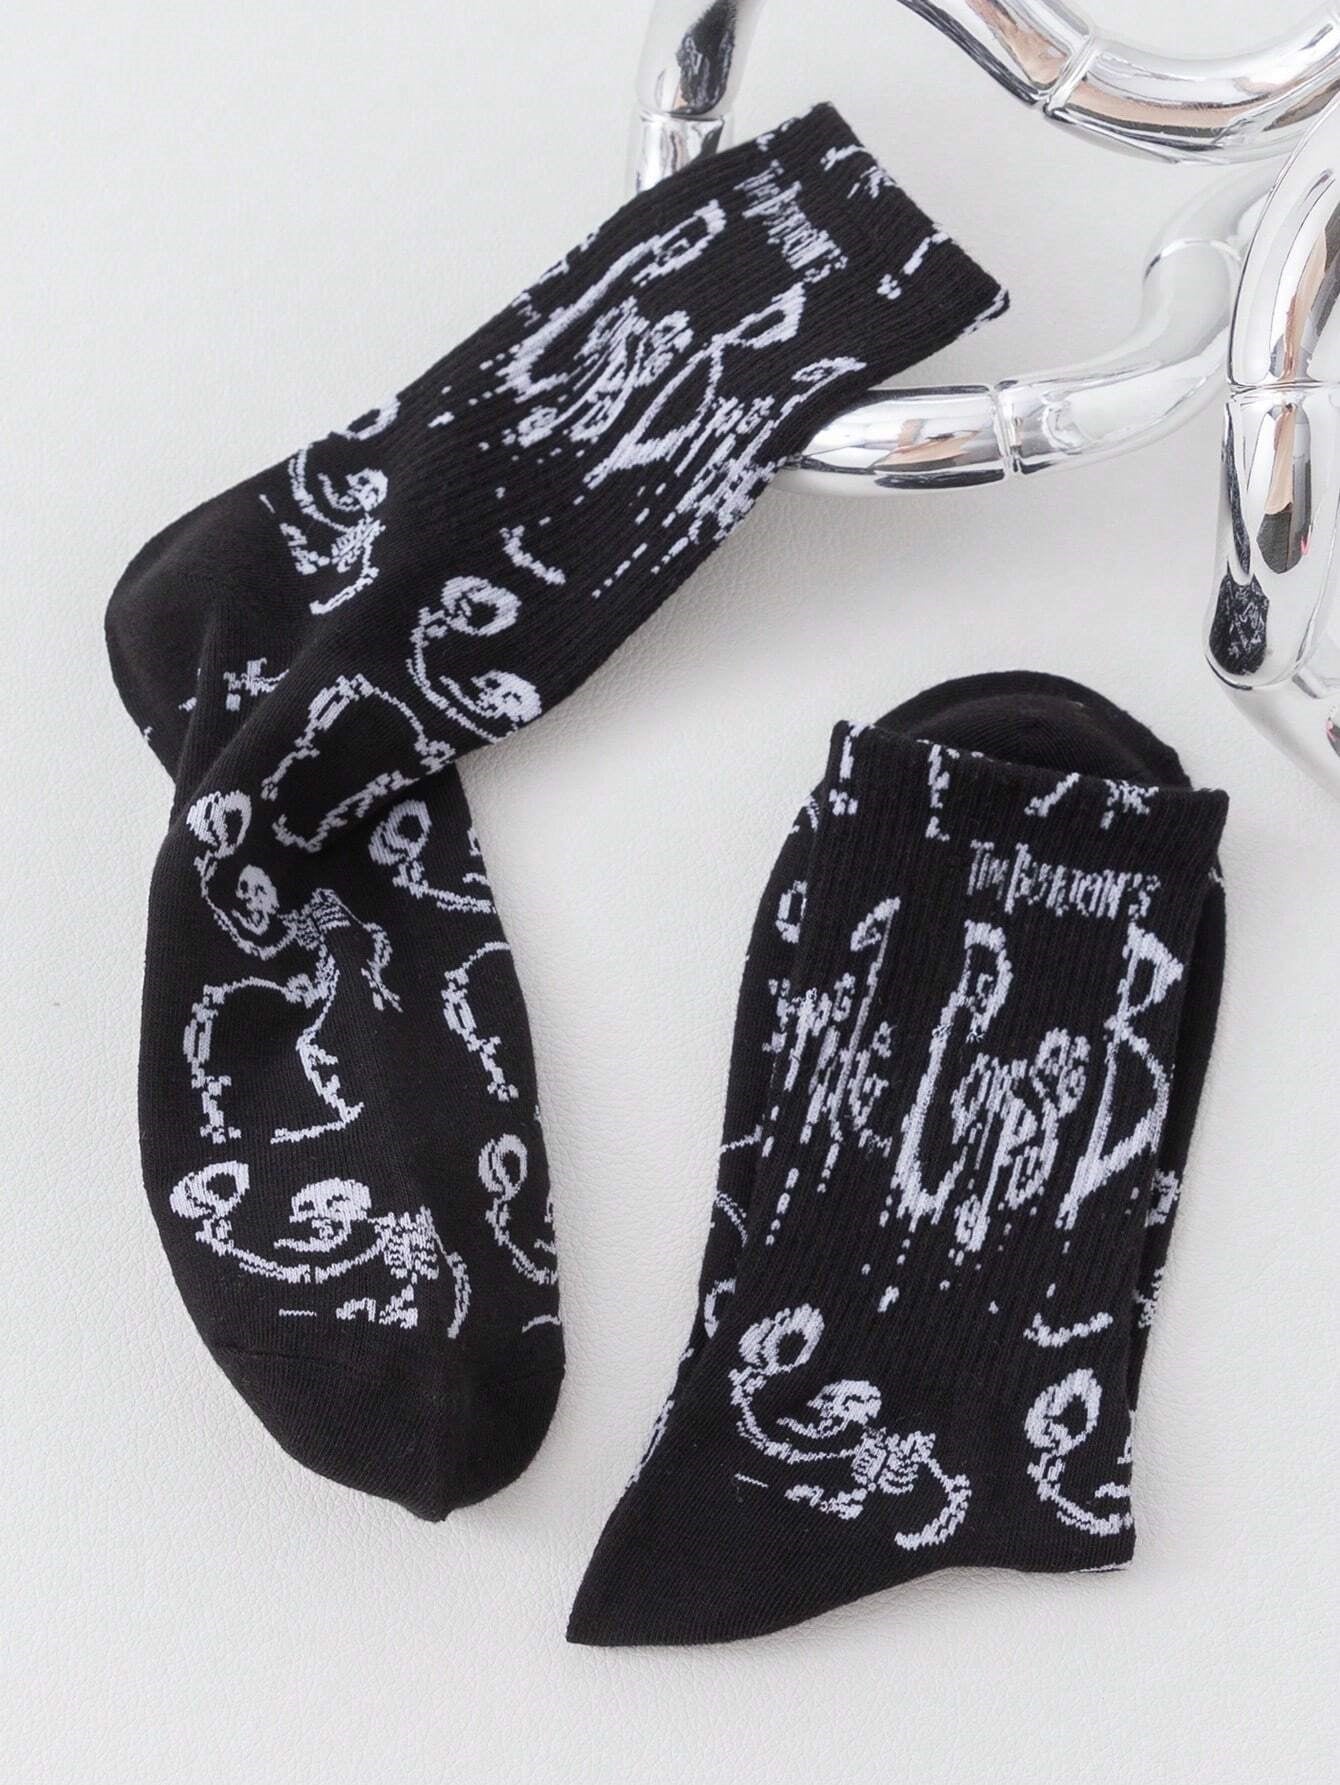 Corpse Bride Socks